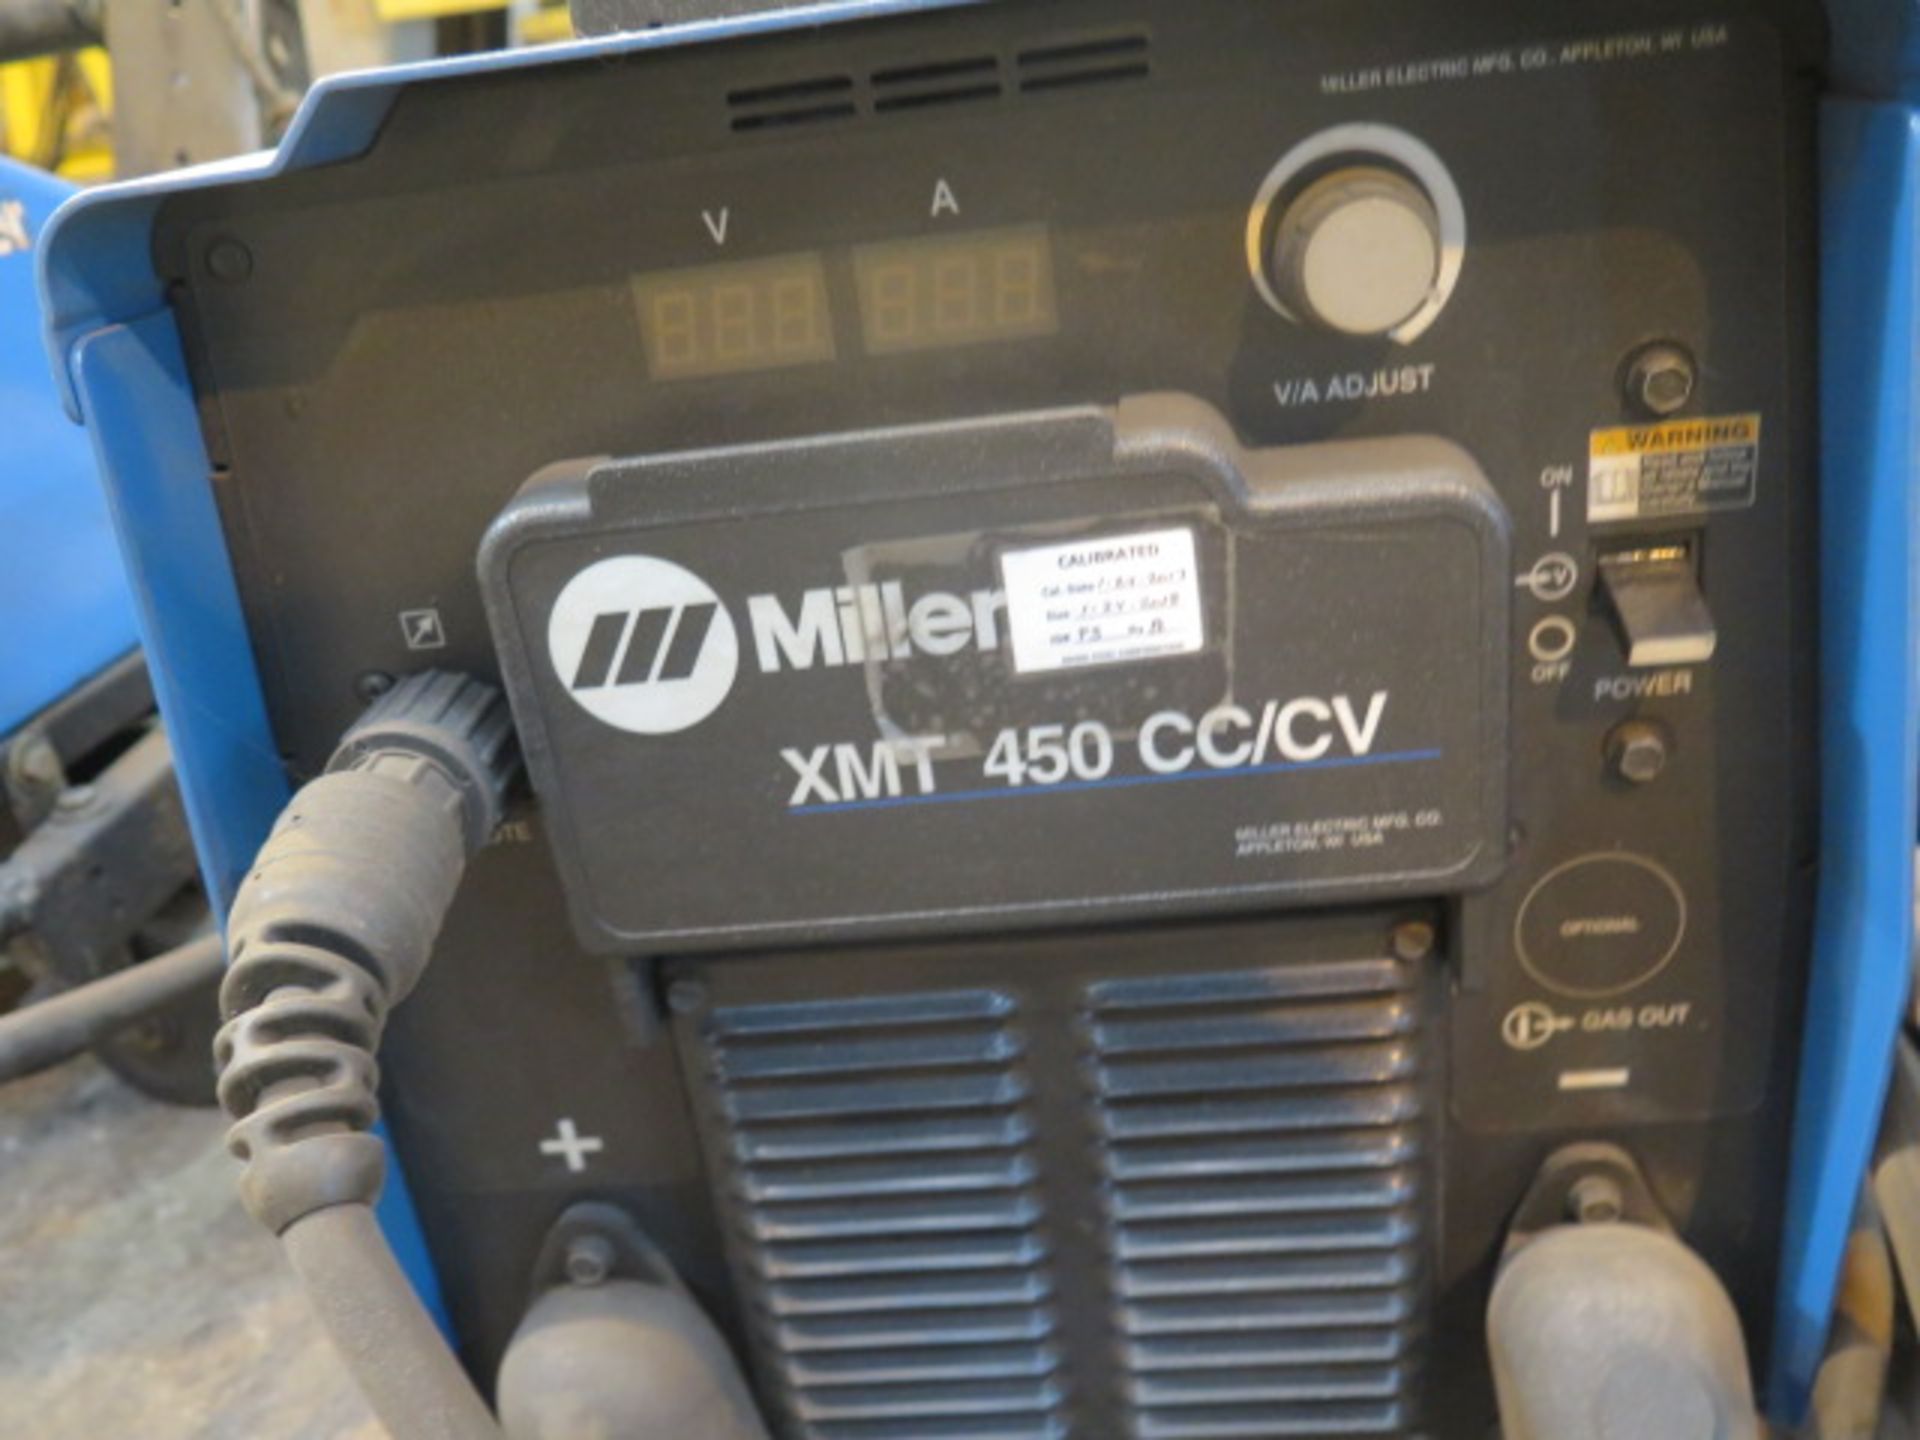 Miller XMT-450 CC/CV Arc Welding Power Source s/n MC450113U w/ Miller 70-Series Wire Feeder - Image 5 of 5